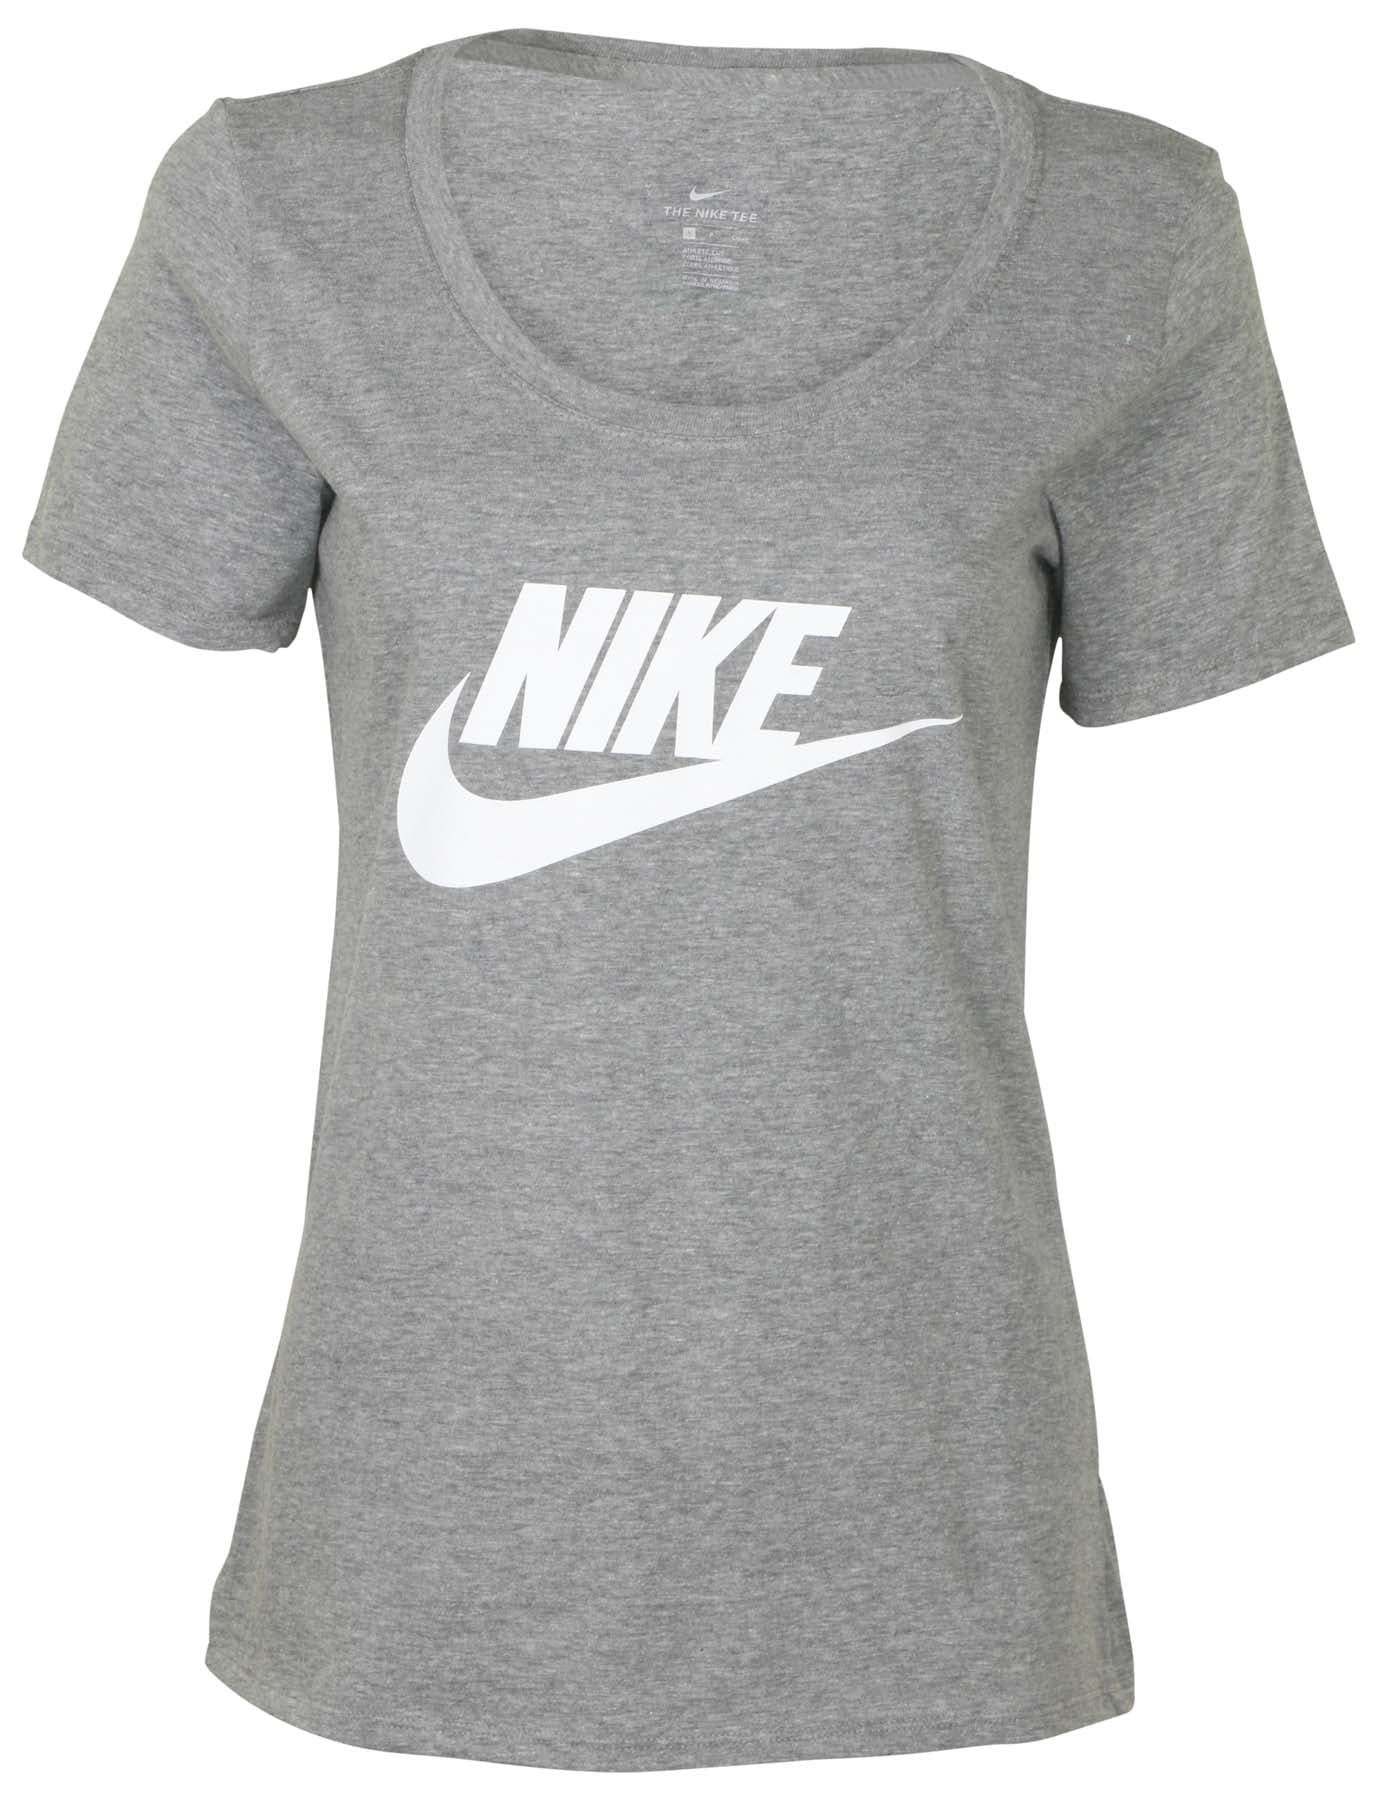 Nike - Nike Women's Futura Nike Swoosh Graphic T-Shirt (Heather Grey, L ...